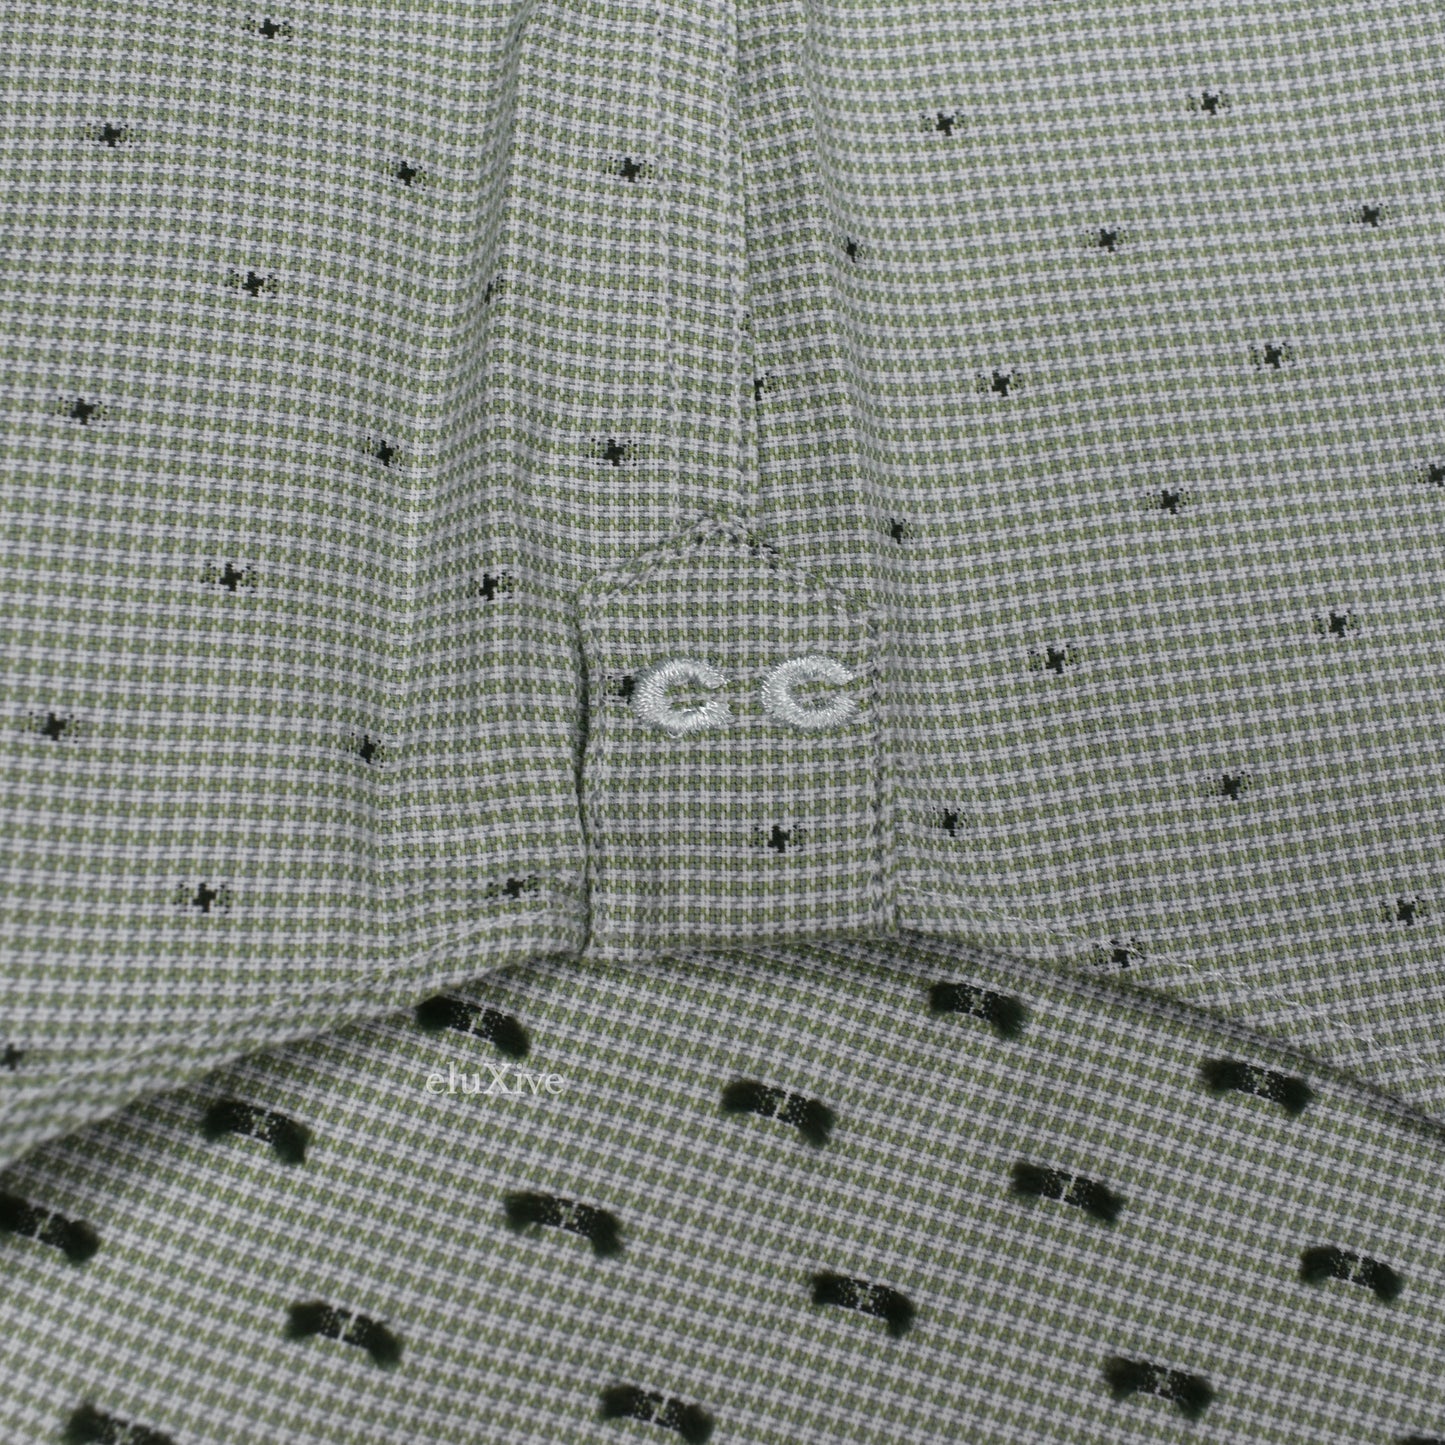 Corneliani - Green Micro Houndstooth Dotted Button Down Shirt